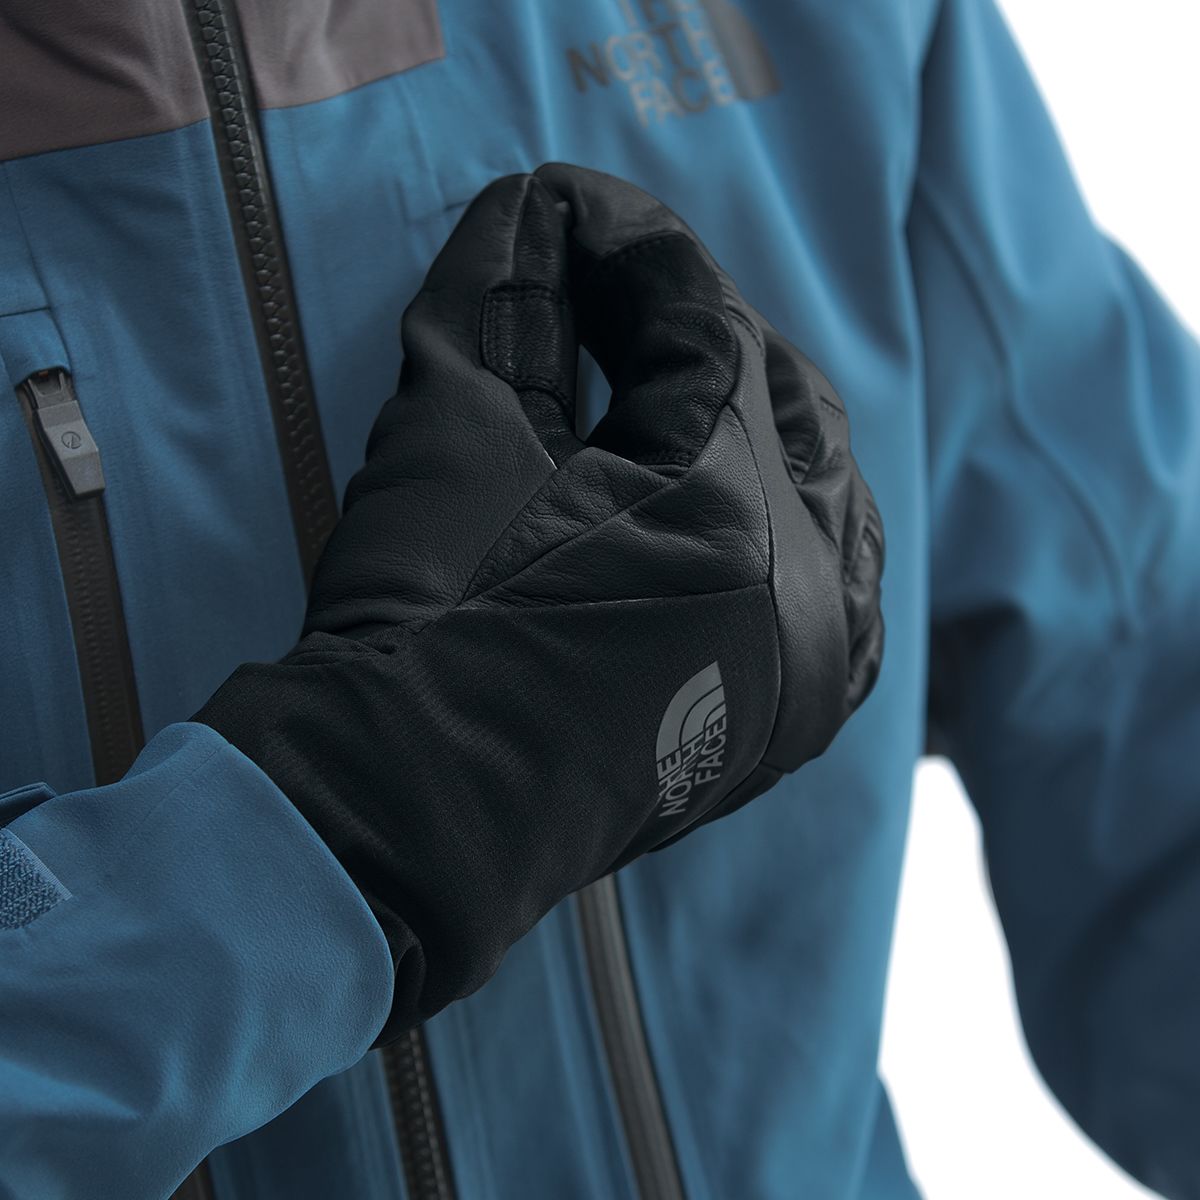 north face patrol glove